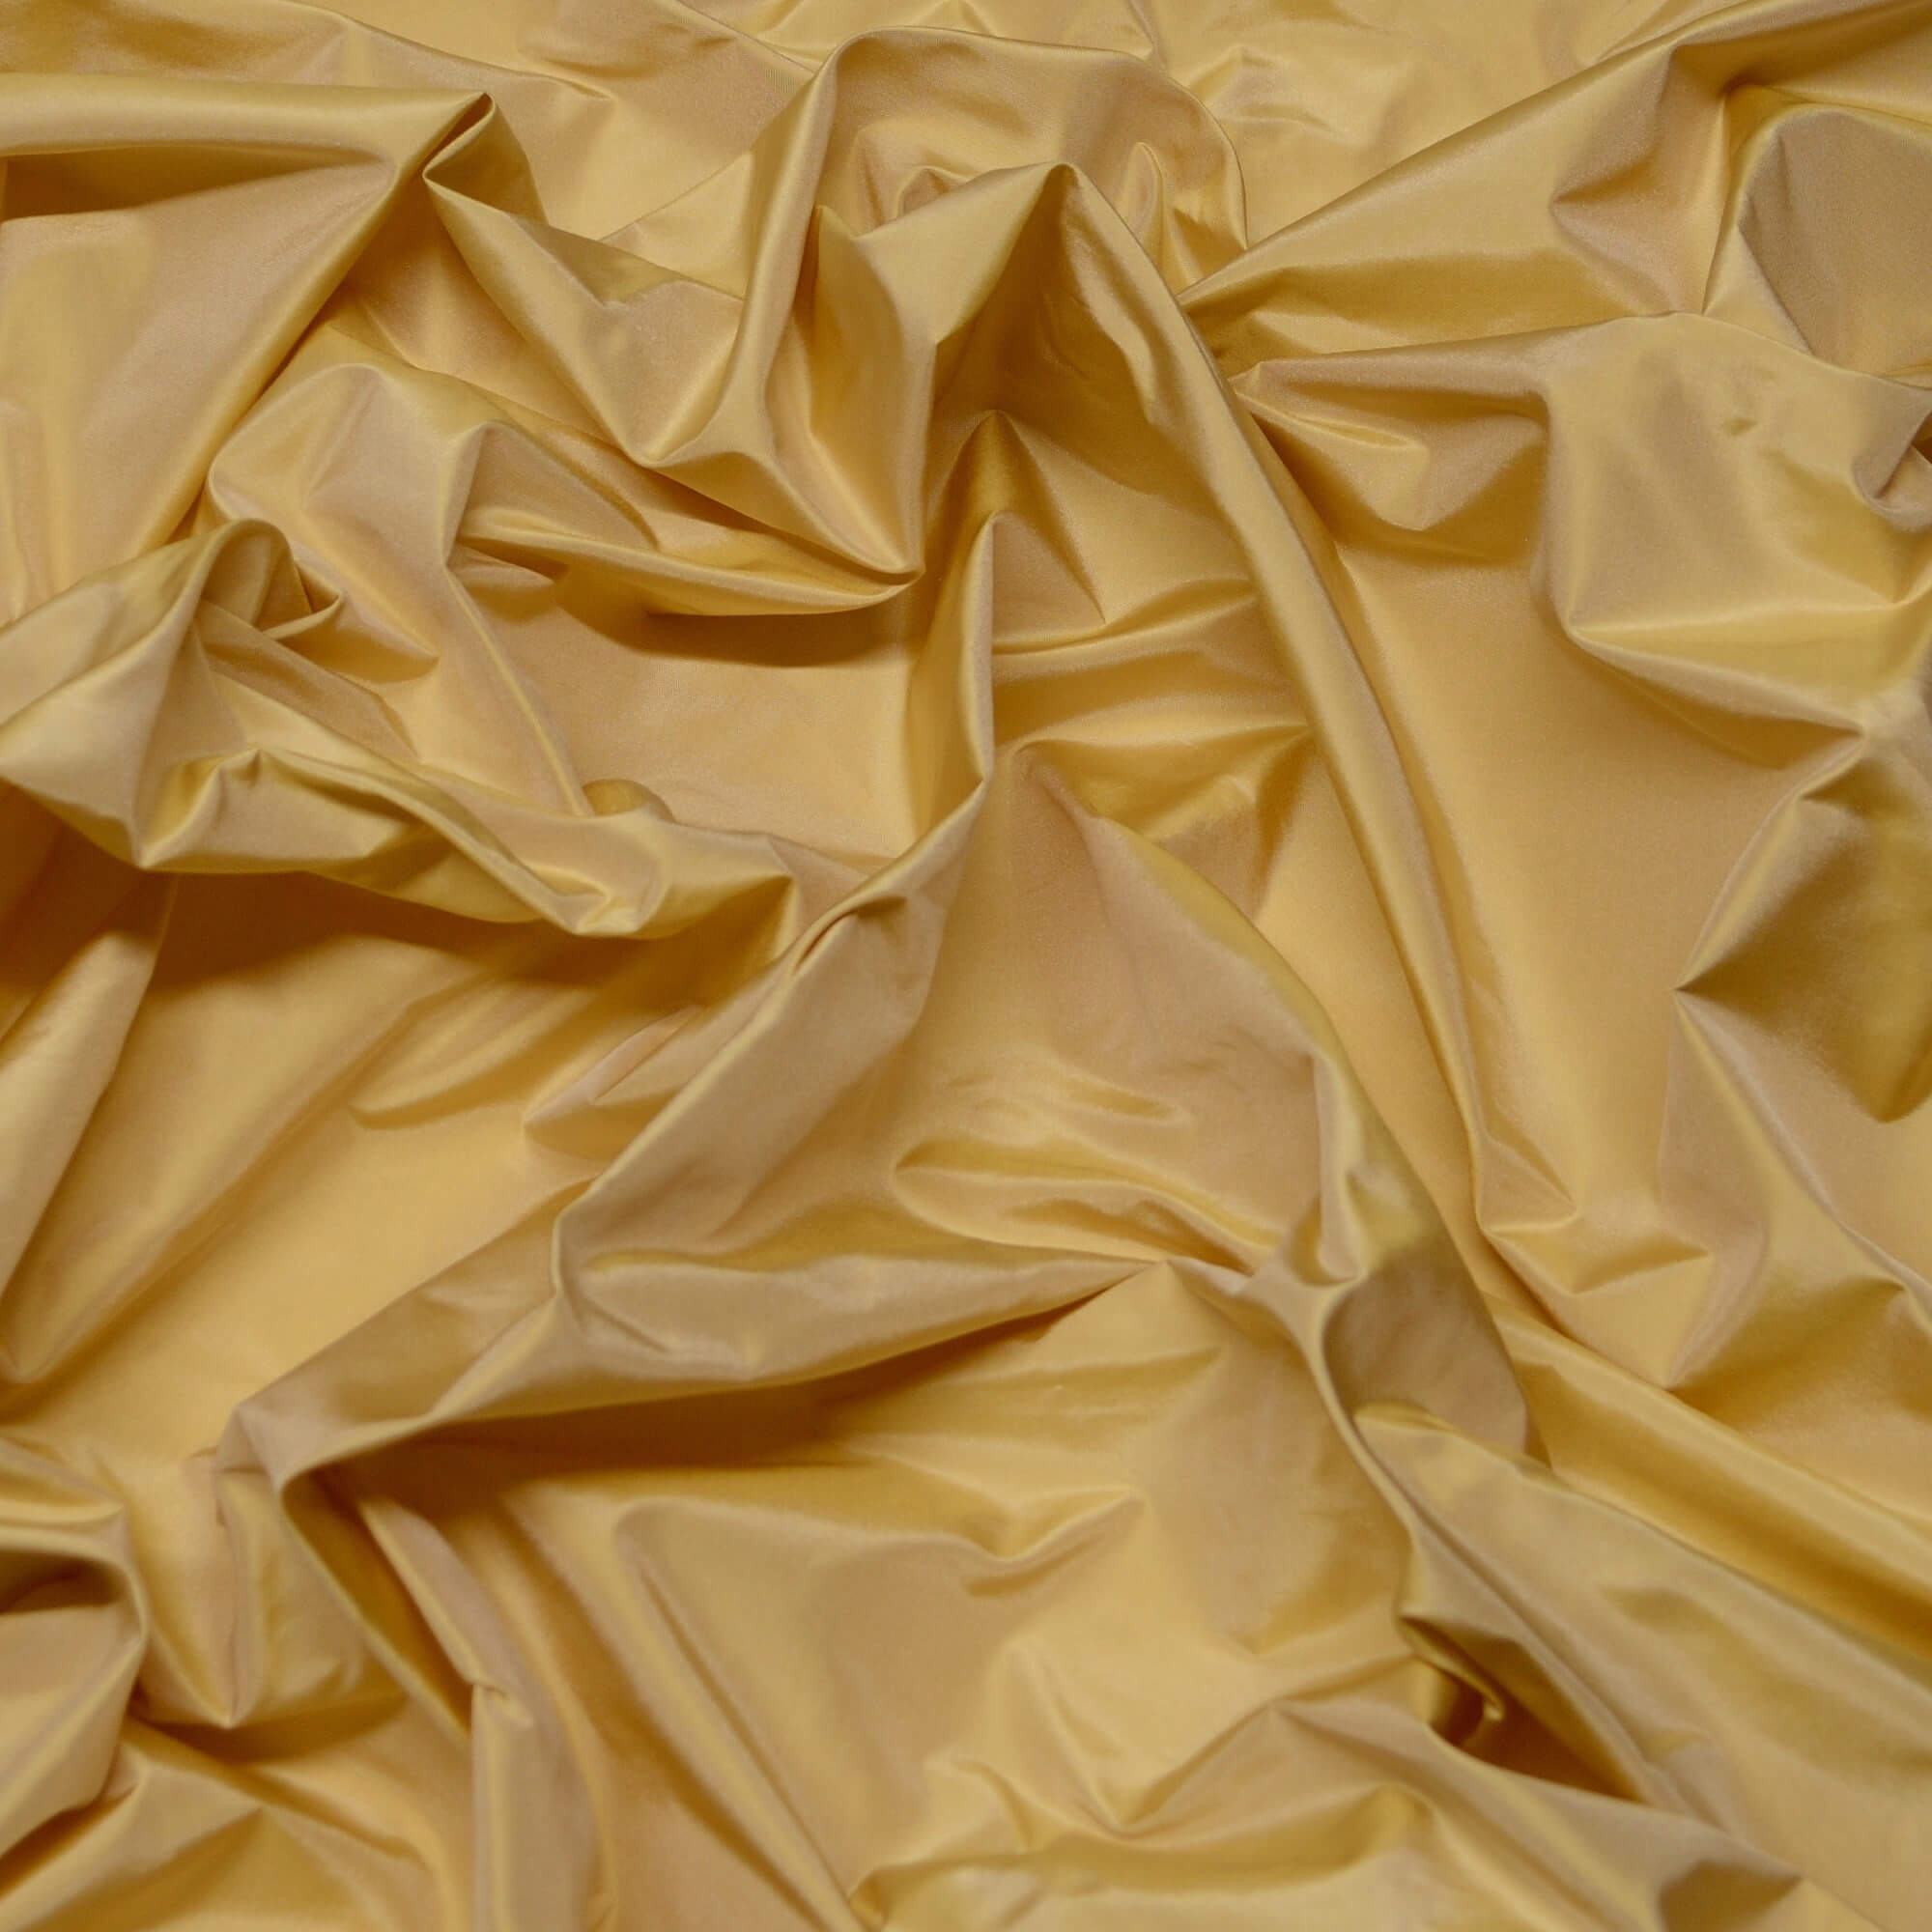 Double Faced Silk Taffeta Fabric: 100% Silk Fabrics from Italy, SKU  00068053 at $13700 — Buy Silk Fabrics Online